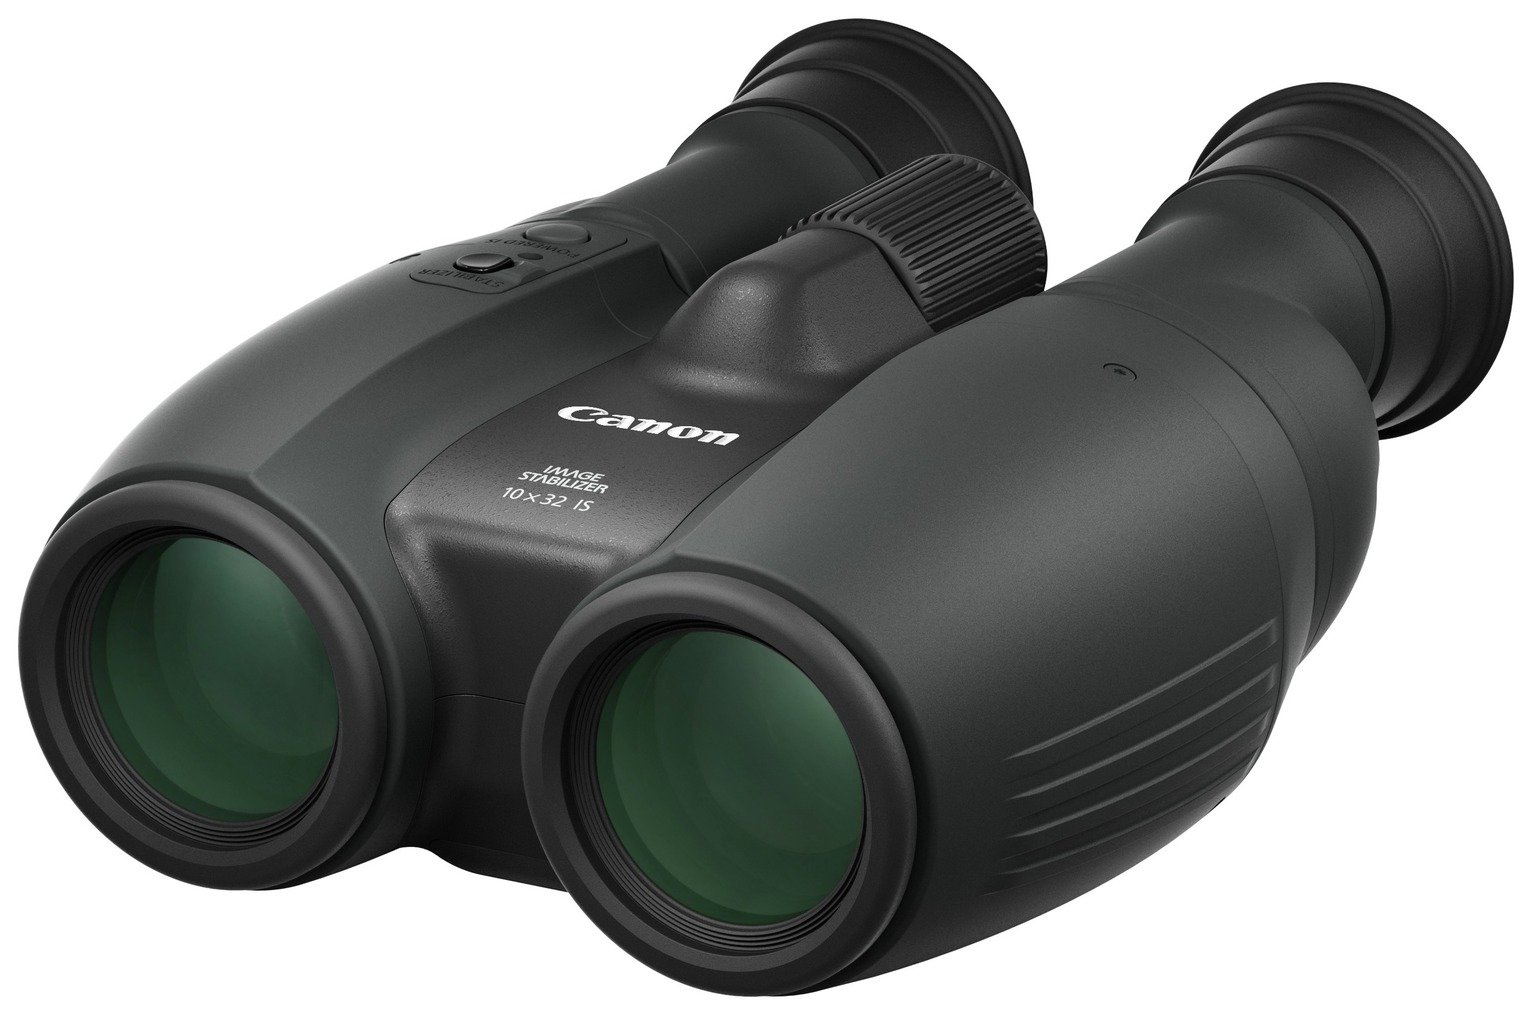 Canon 10 x 32 IS Binoculars review